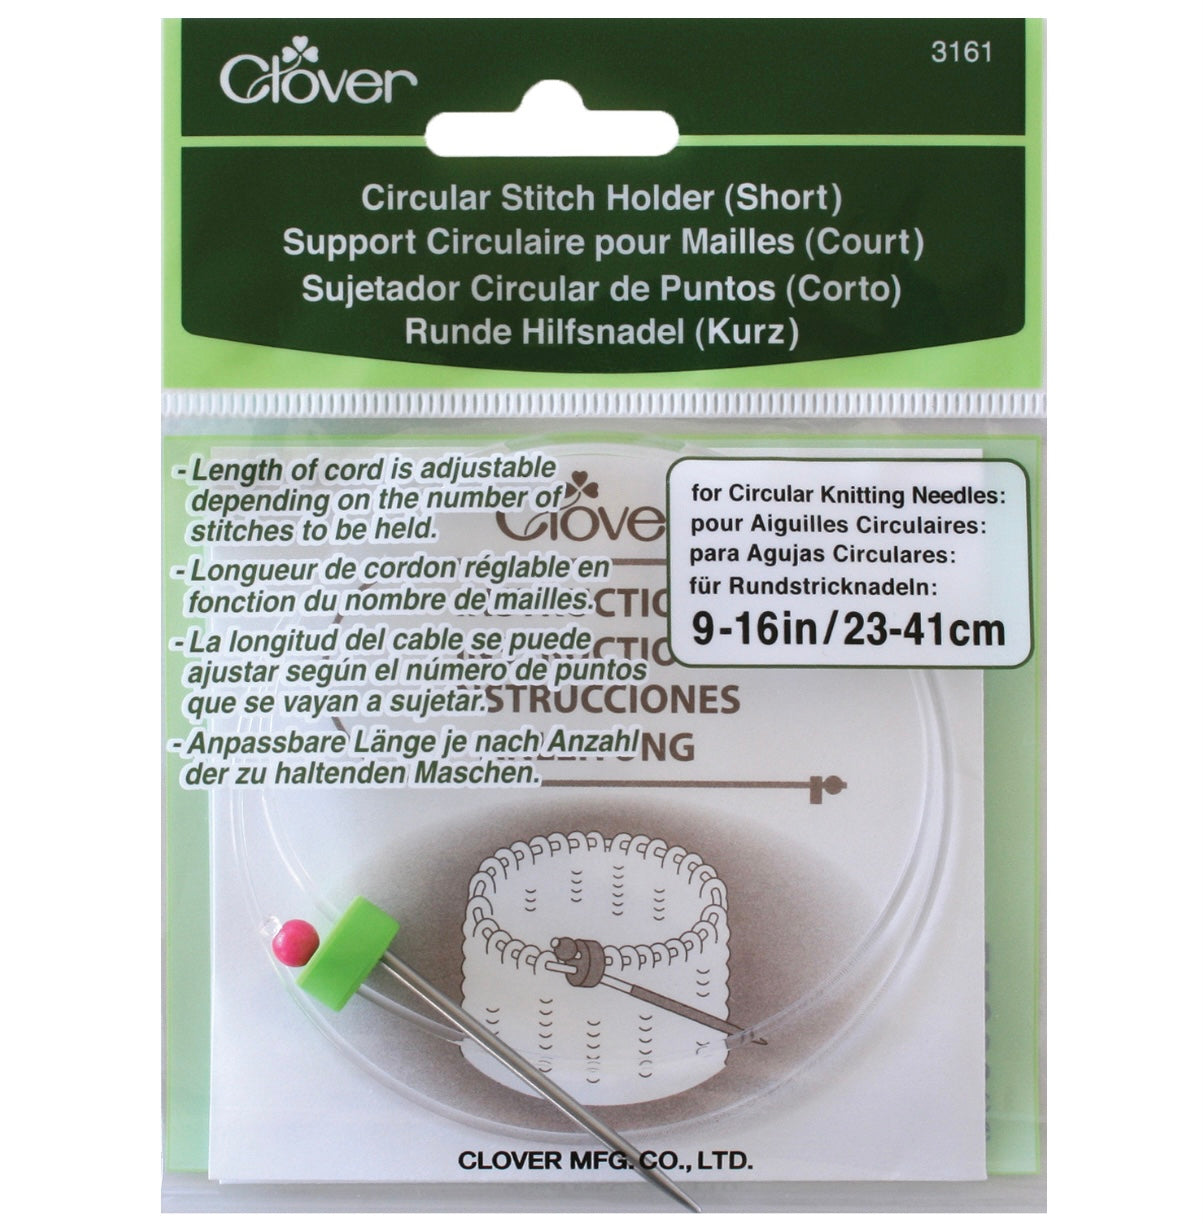 Clover Circular Stitch Holder (Short)